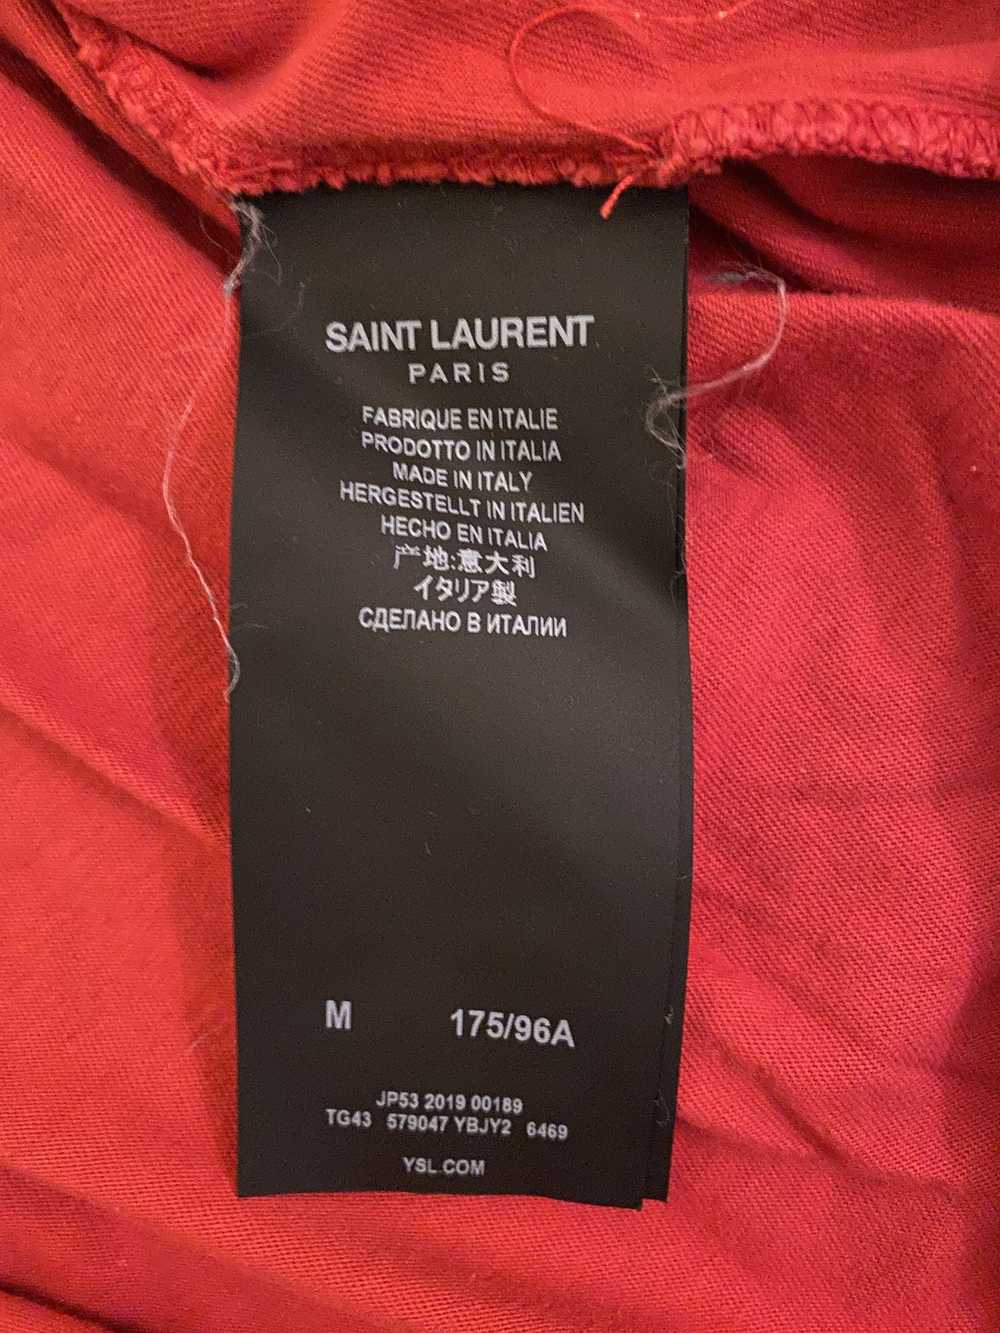 Saint Laurent Paris × Yves Saint Laurent Music Tee - image 3